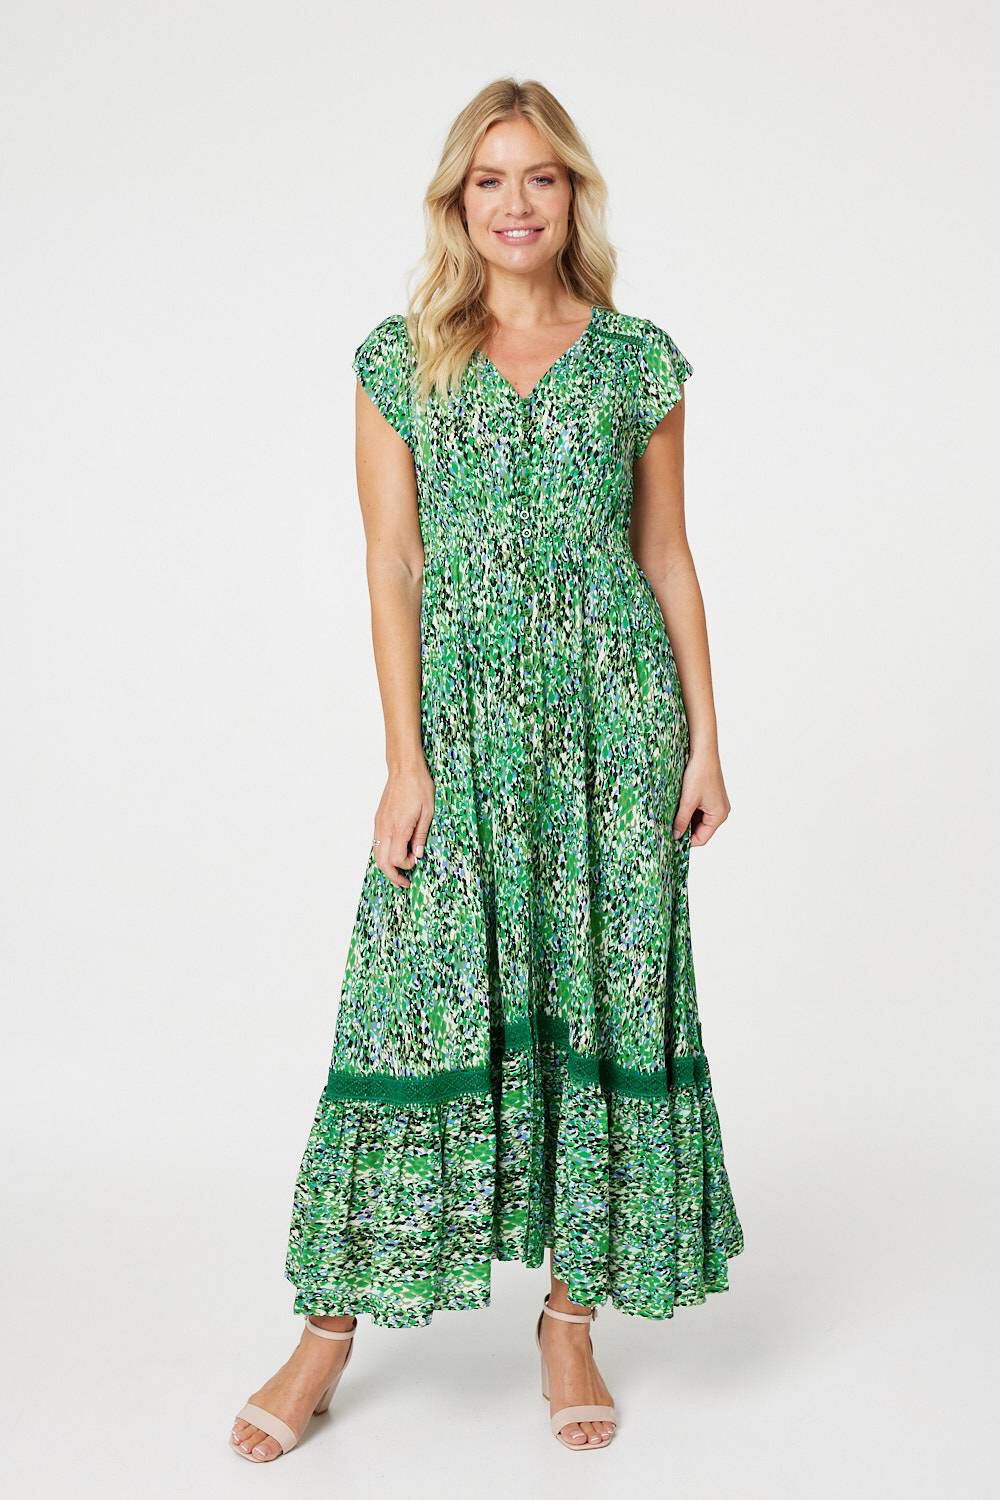 Izabel London Green - Printed Lace Detail Maxi Dress, Size: 12